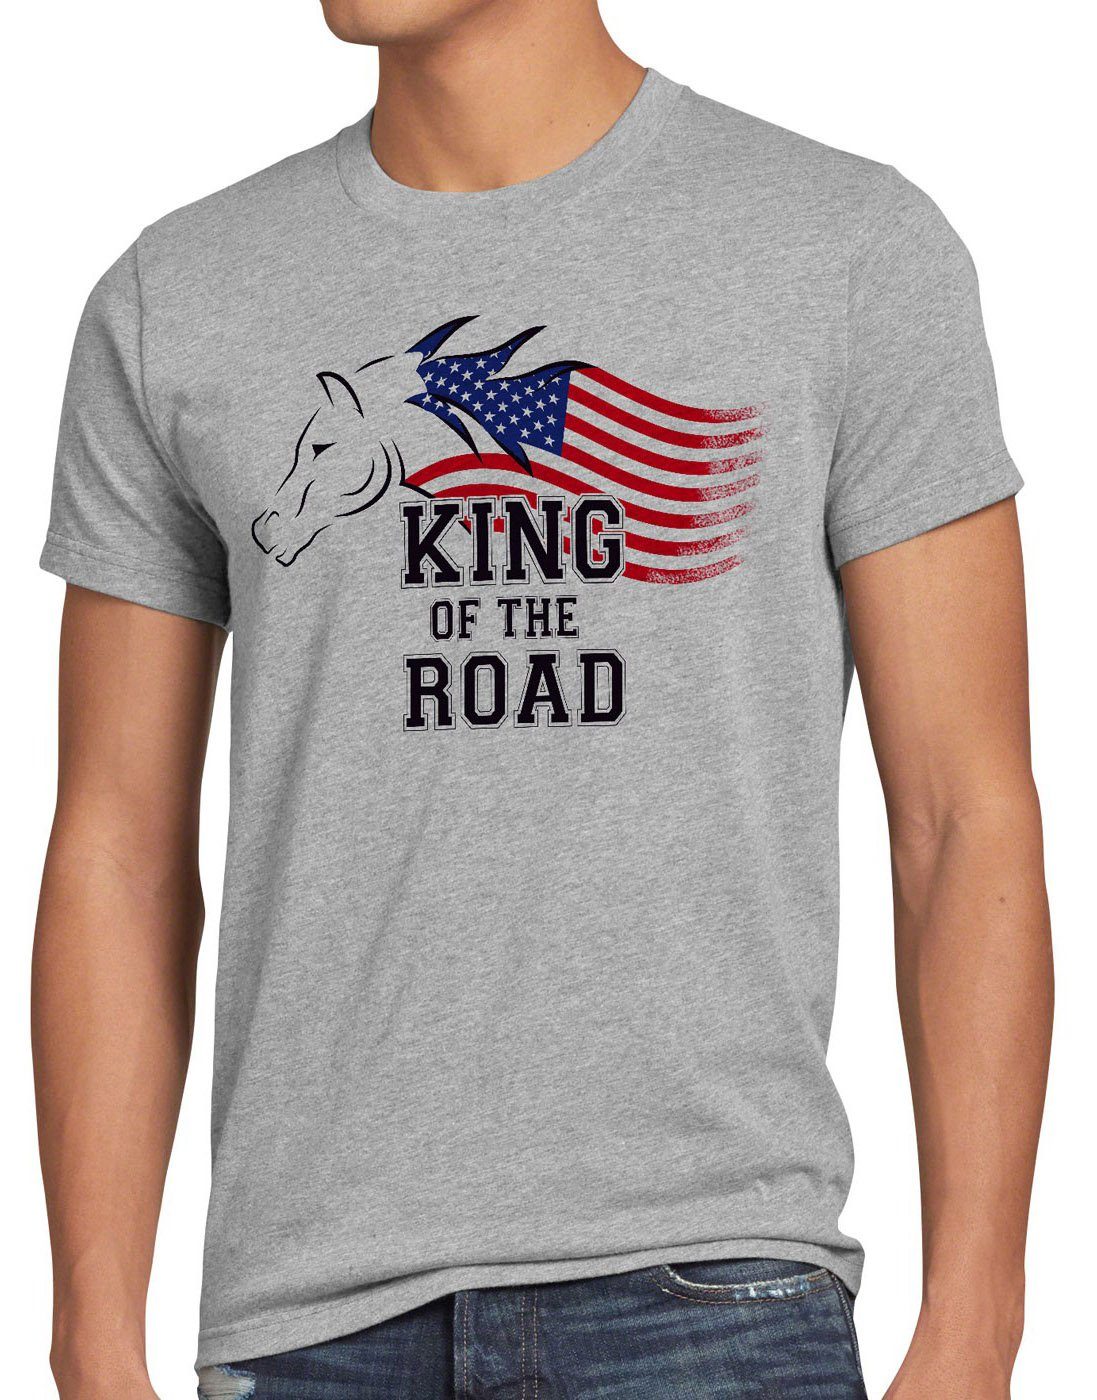 style3 Print-Shirt Herren T-Shirt King of the Road Amerika America Muscle Car motor tuning auto usa grau meliert